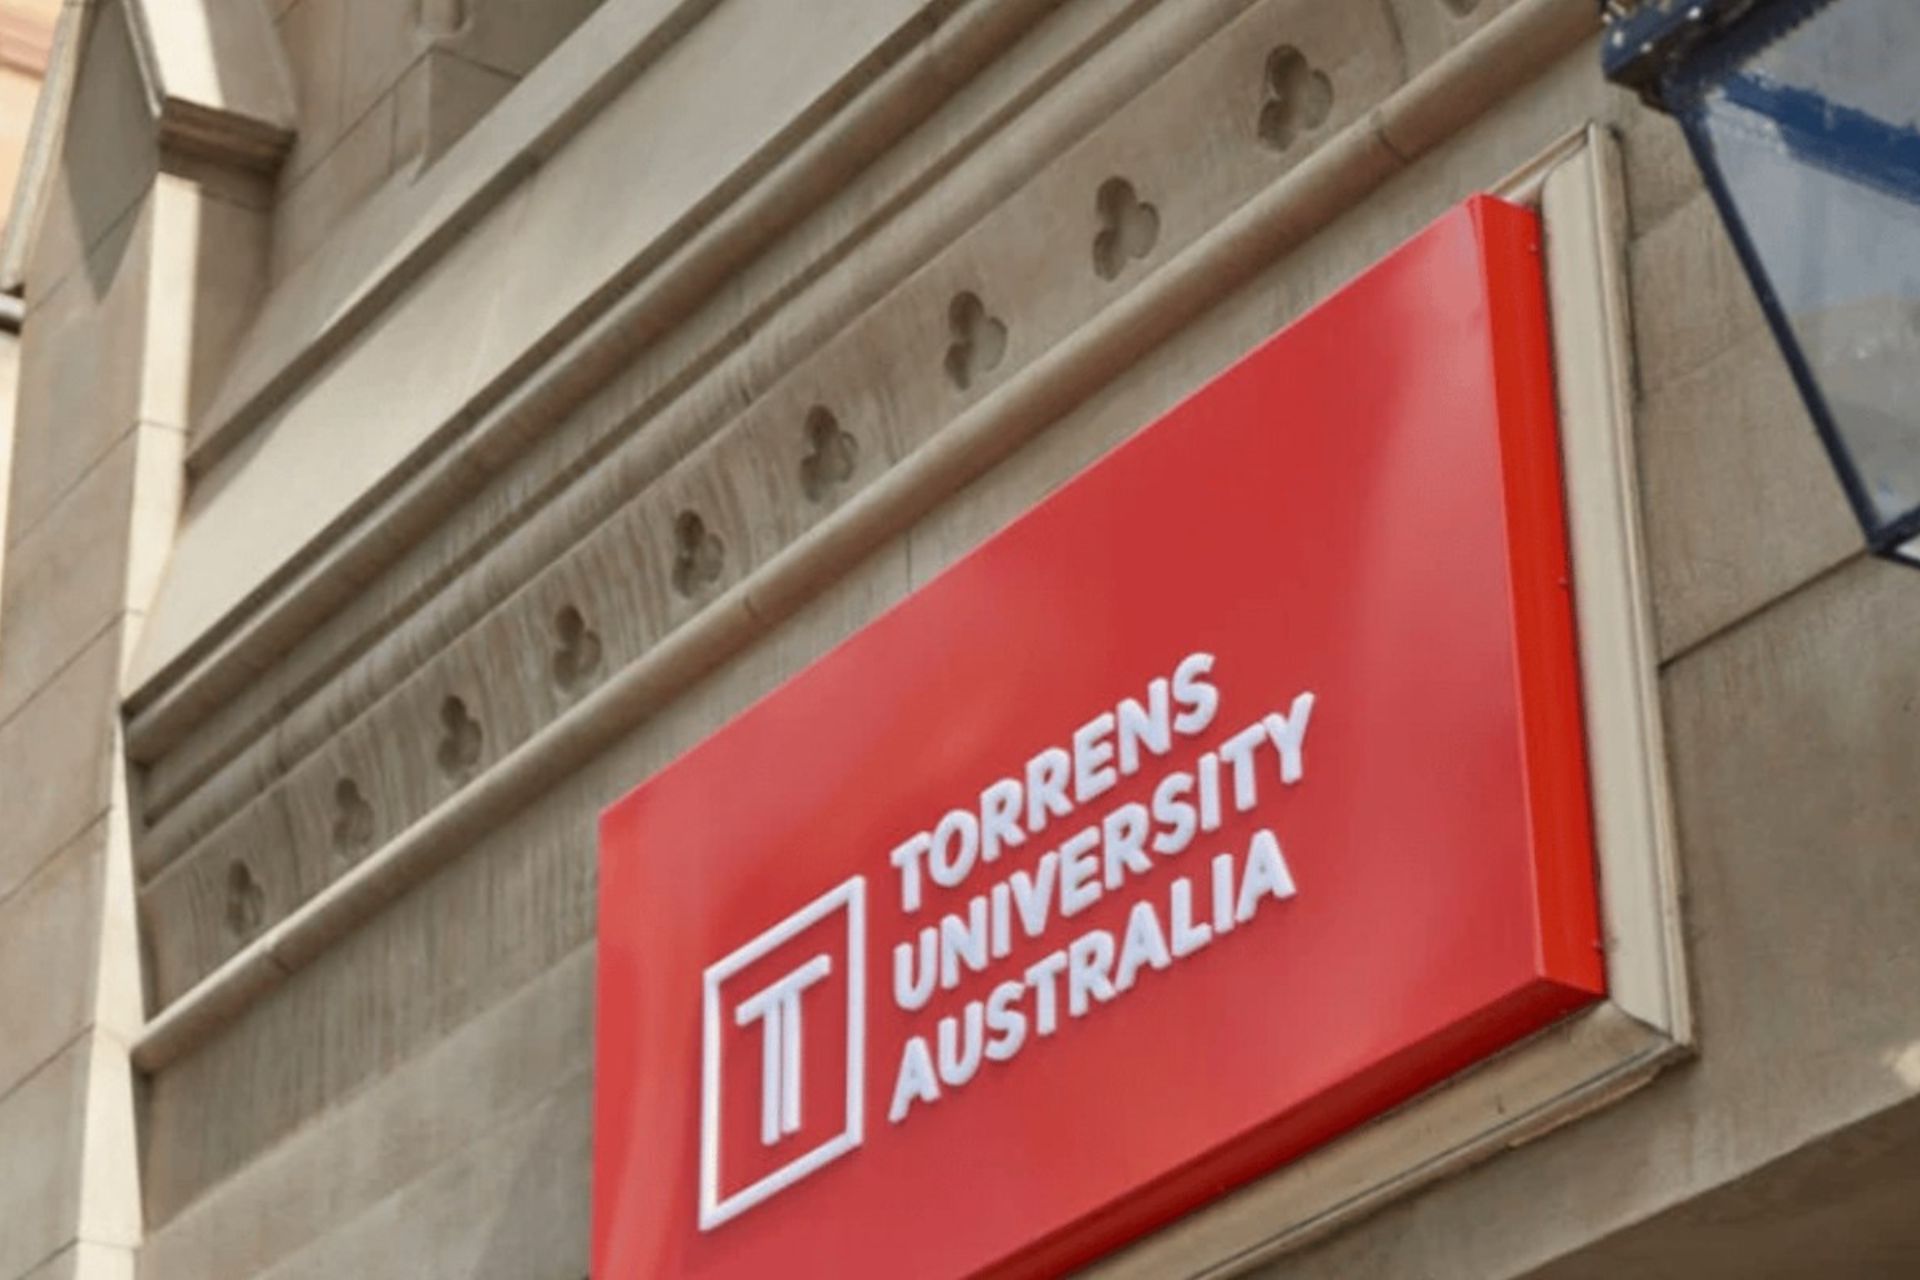 Microsoft Torrens University